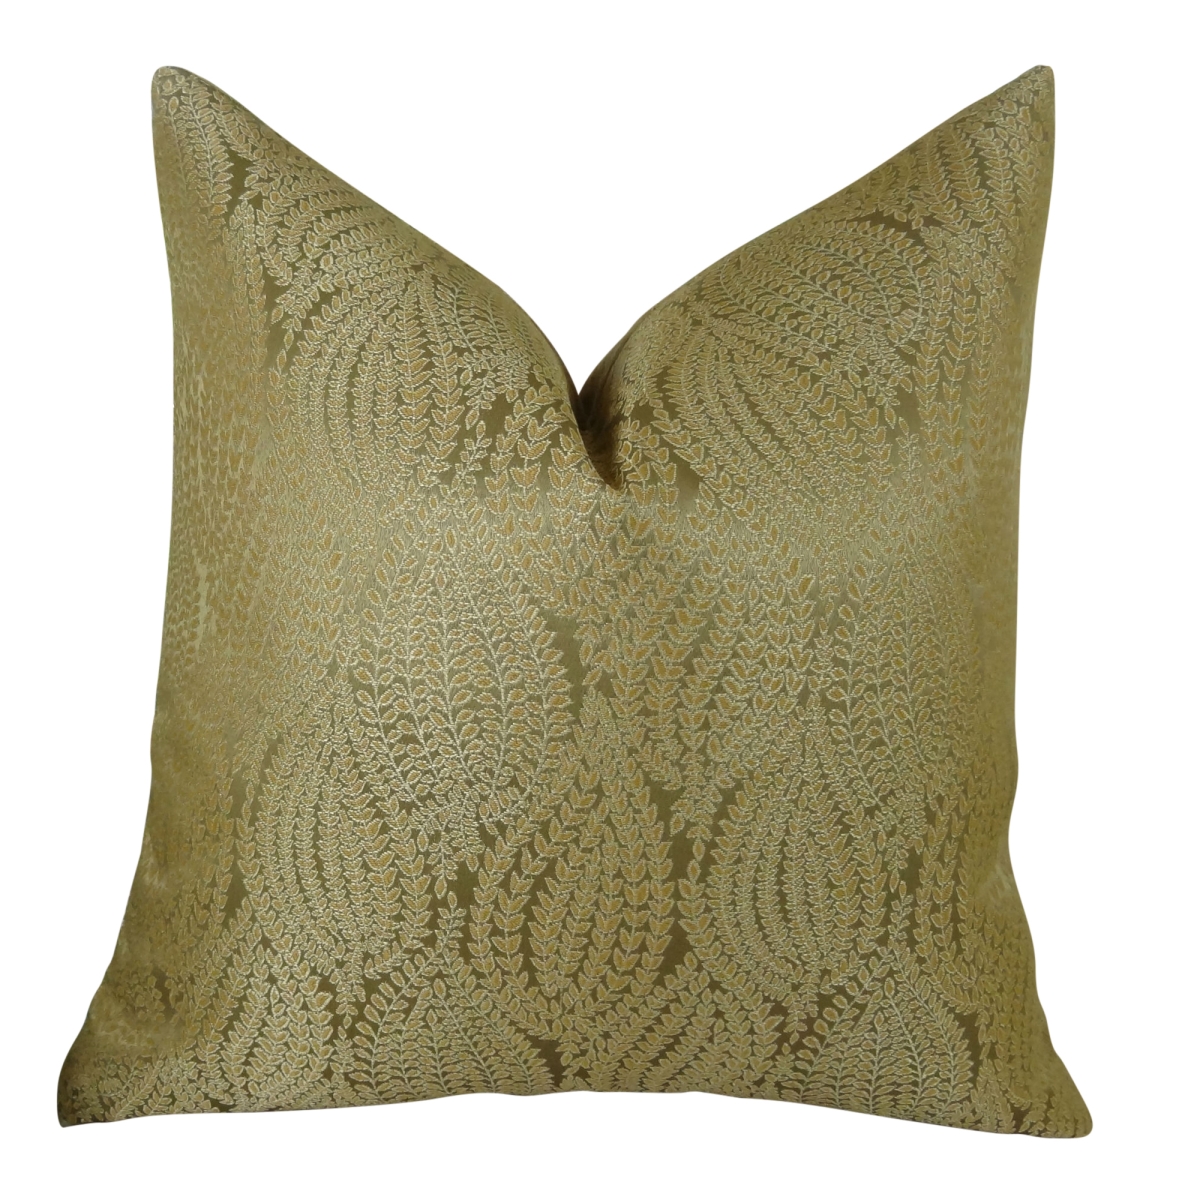 Pb11015-2026-sp 20 X 26 In. Standard Size Leaf Pod Handmade Throw Pillow - Gold